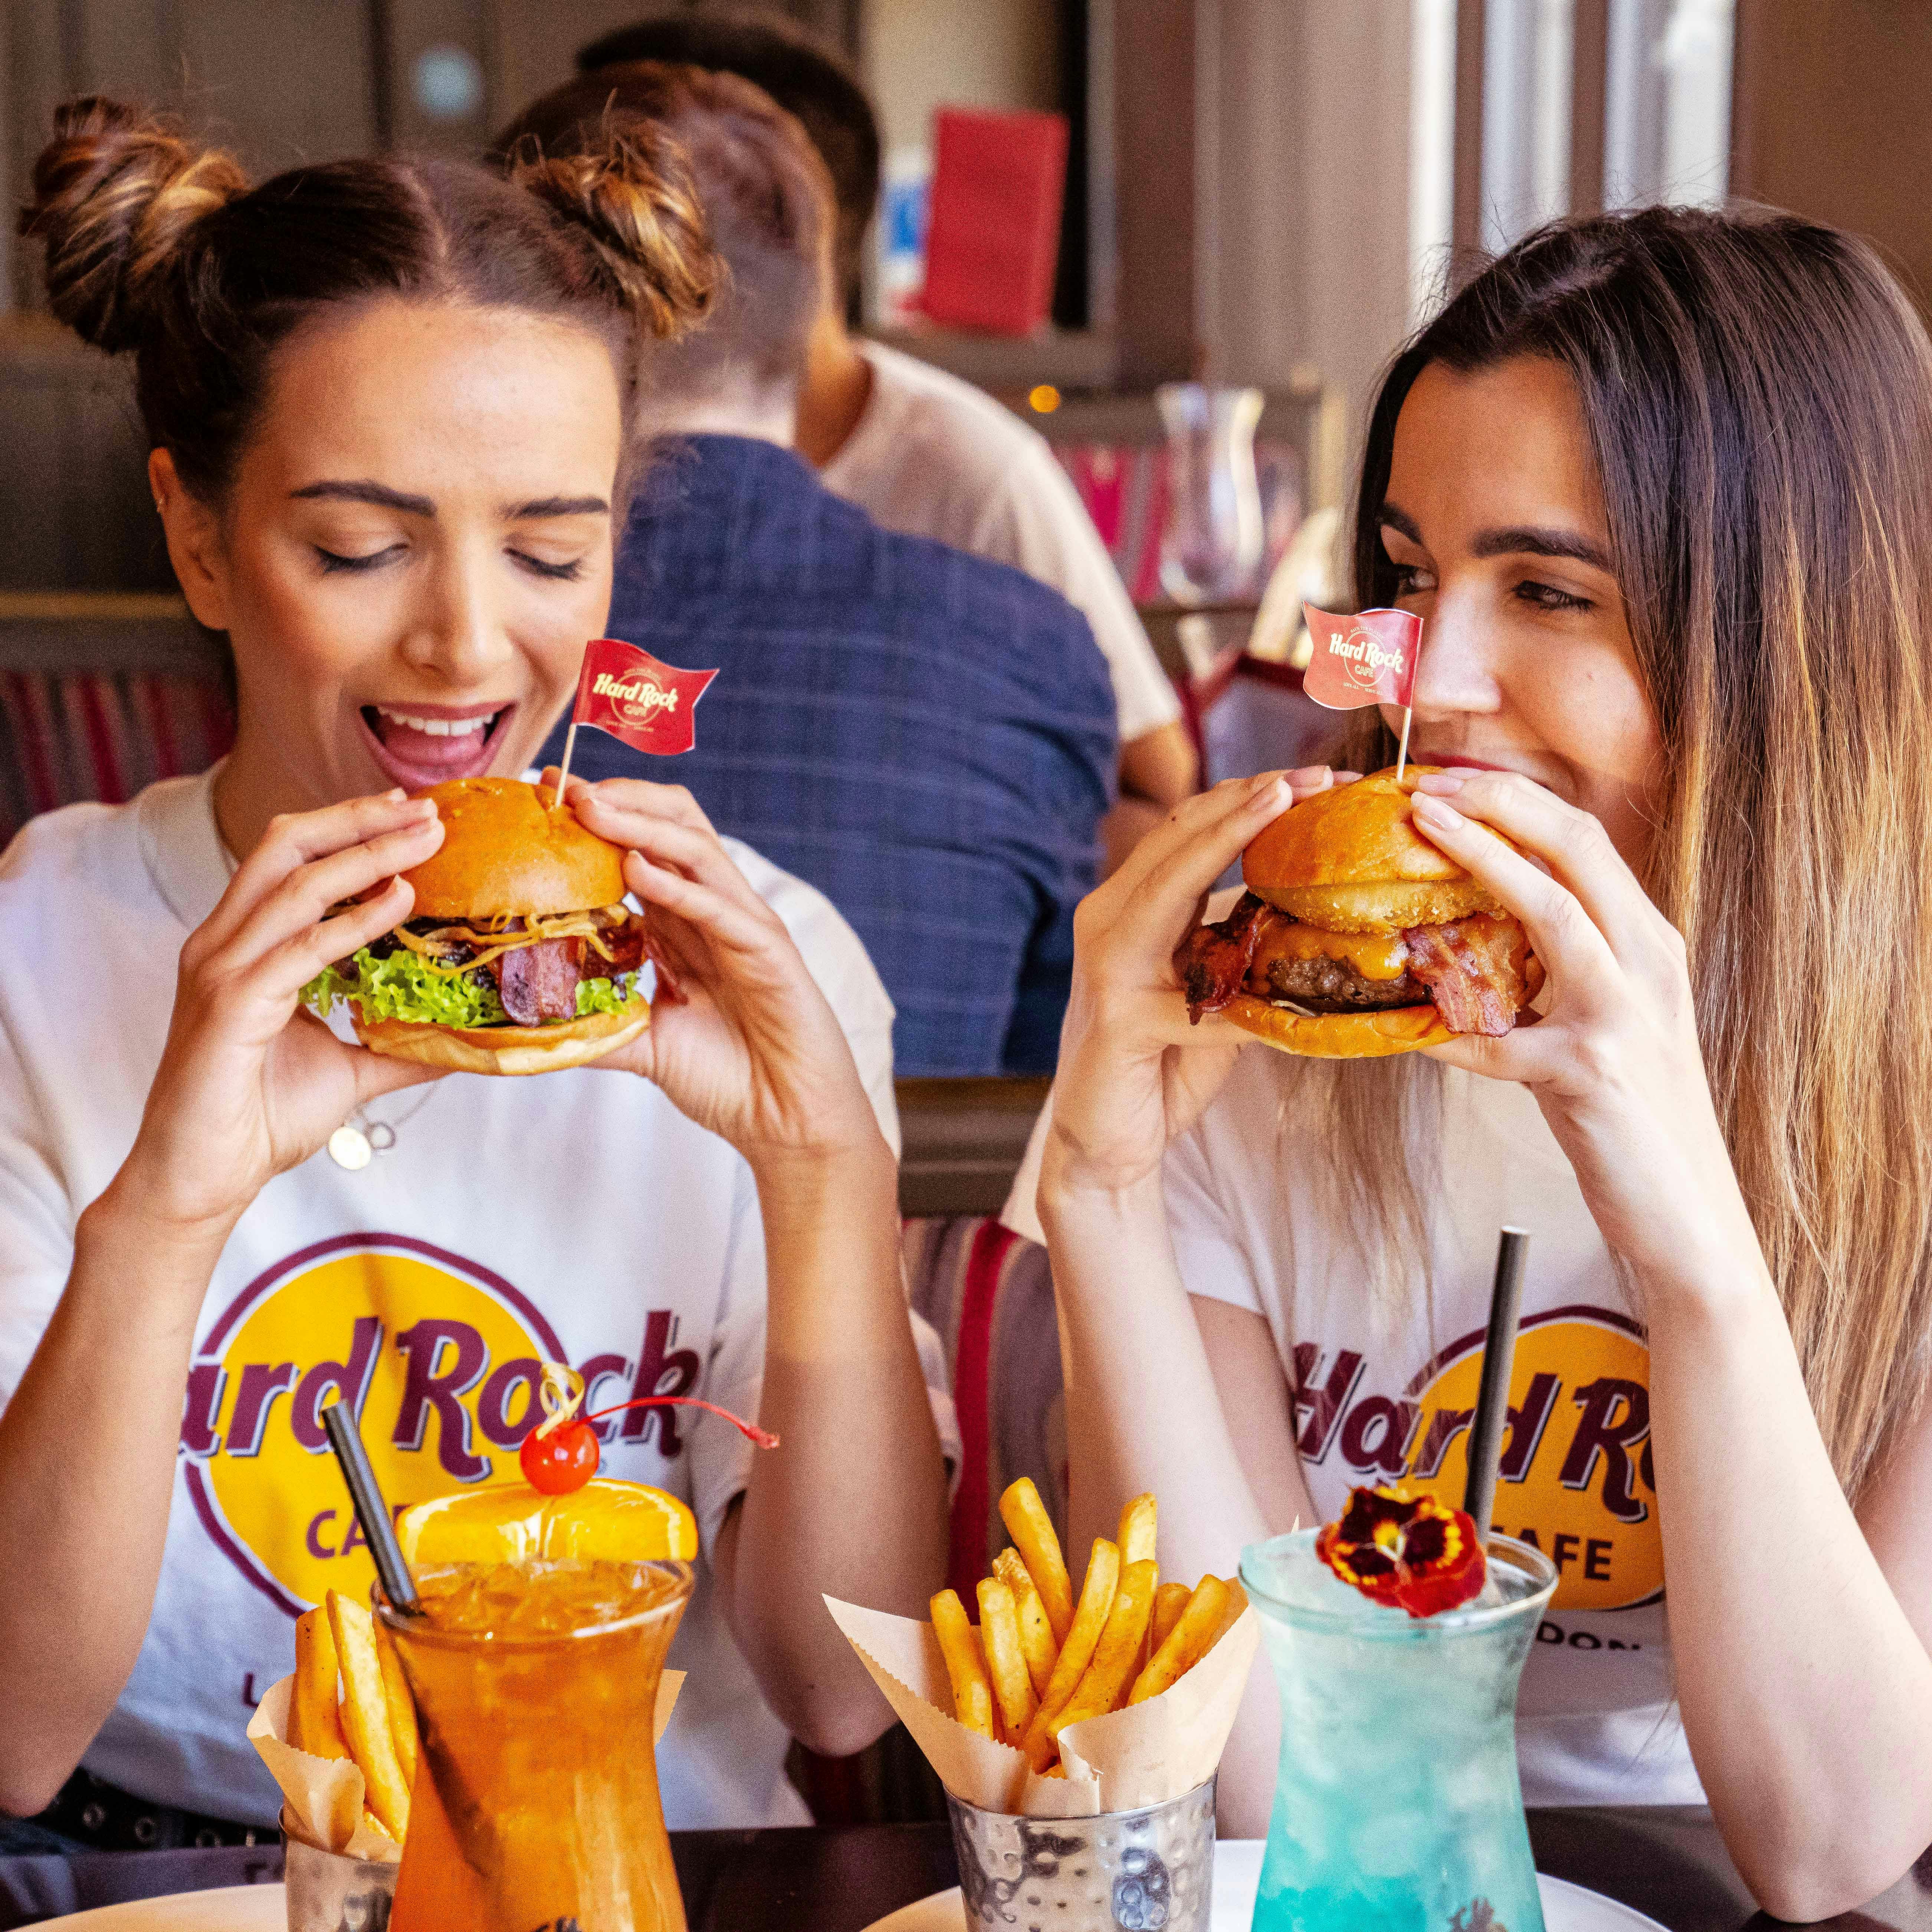 Hard Rock Cafe burgers.jpg